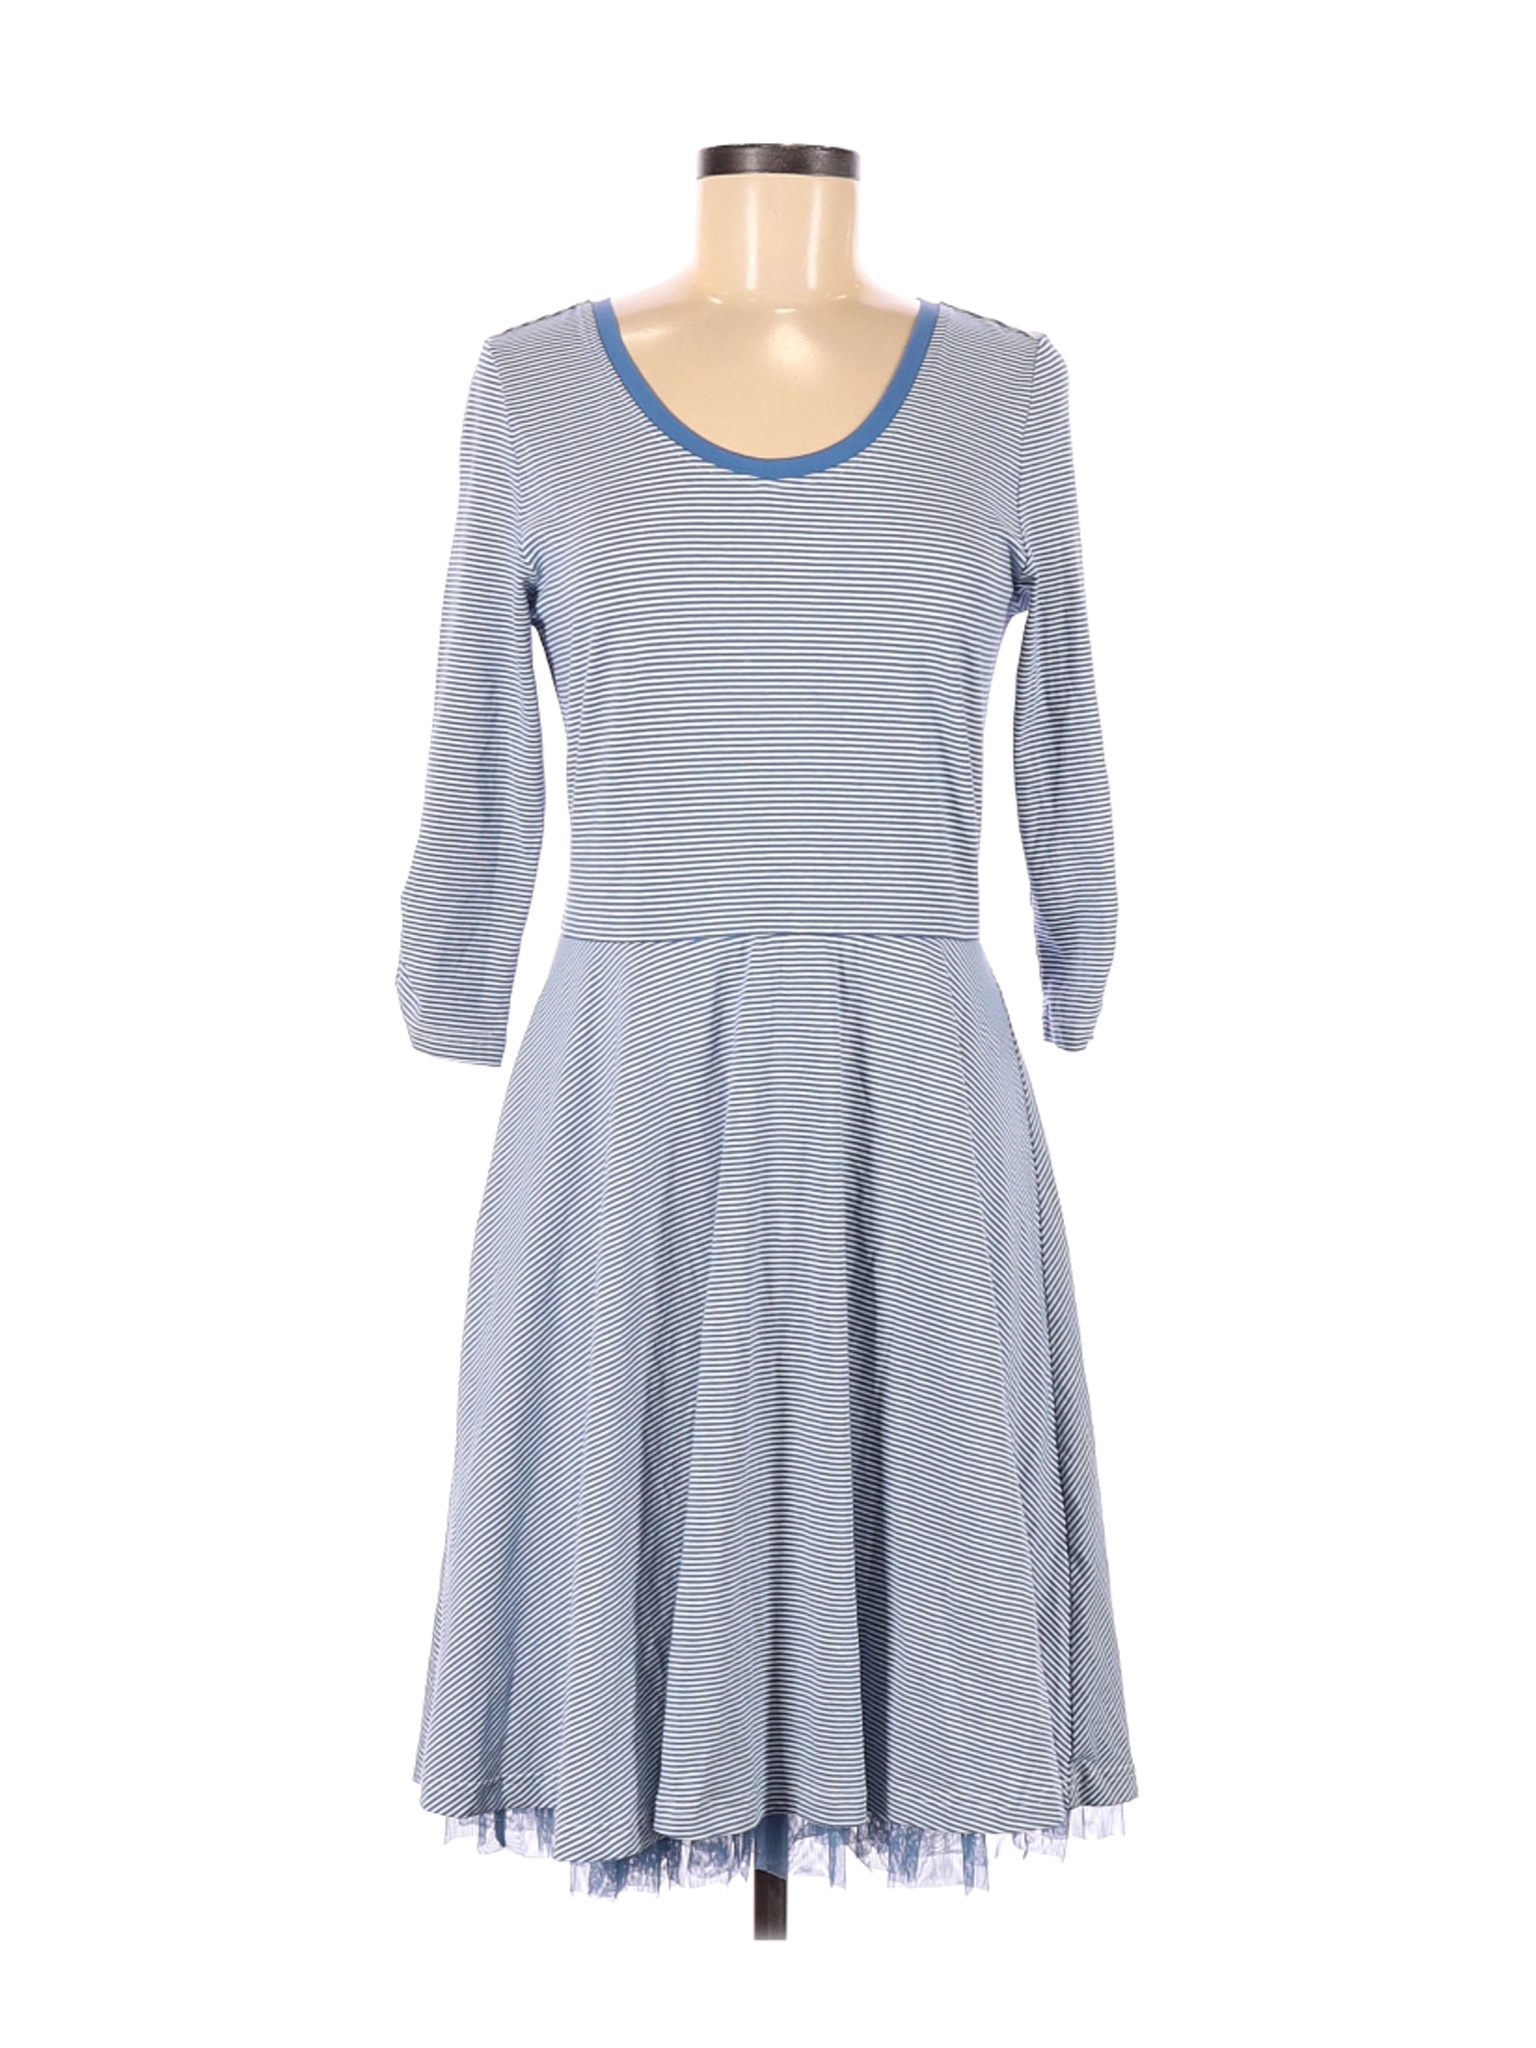 Matilda Jane Women Blue Casual Dress M | eBay